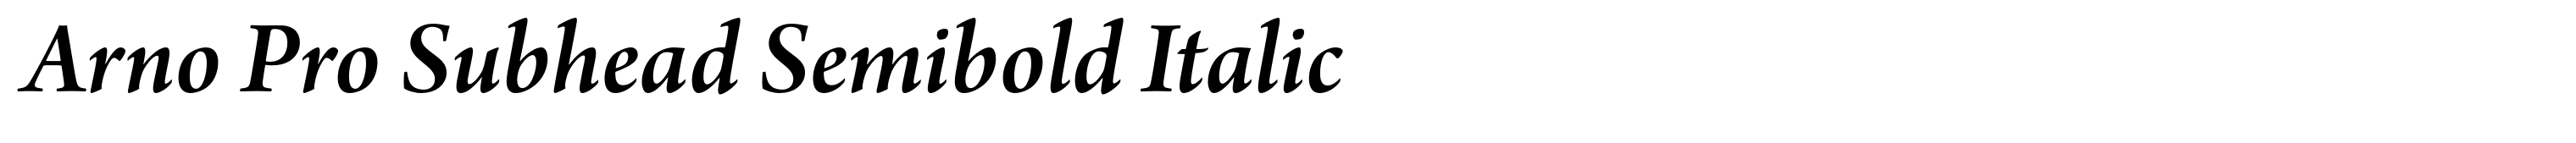 Arno Pro Subhead Semibold Italic